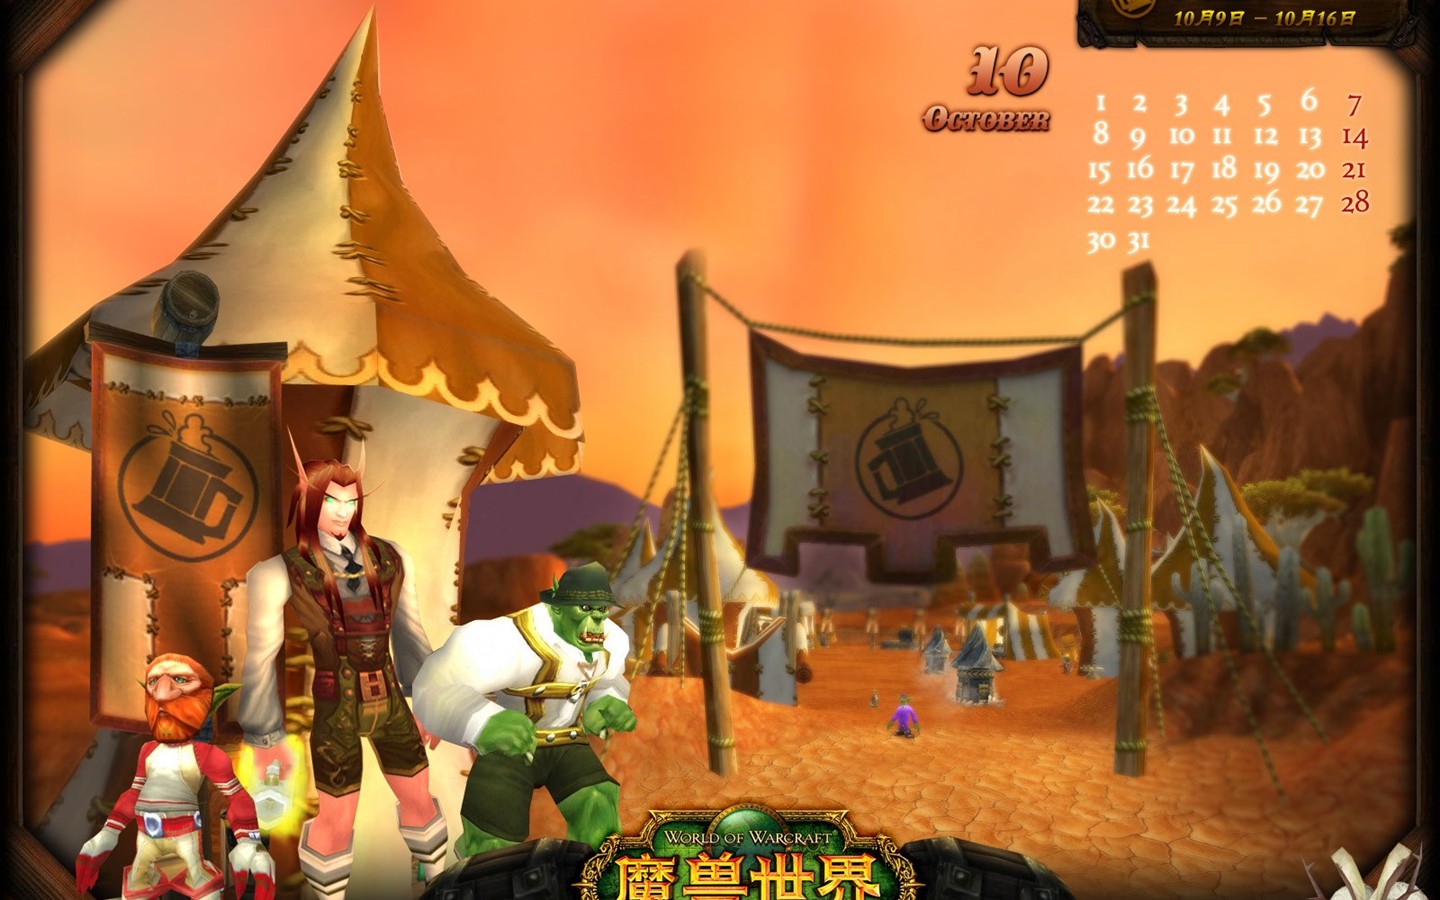 World of Warcraft: fondo de pantalla oficial de The Burning Crusade (1) #31 - 1440x900